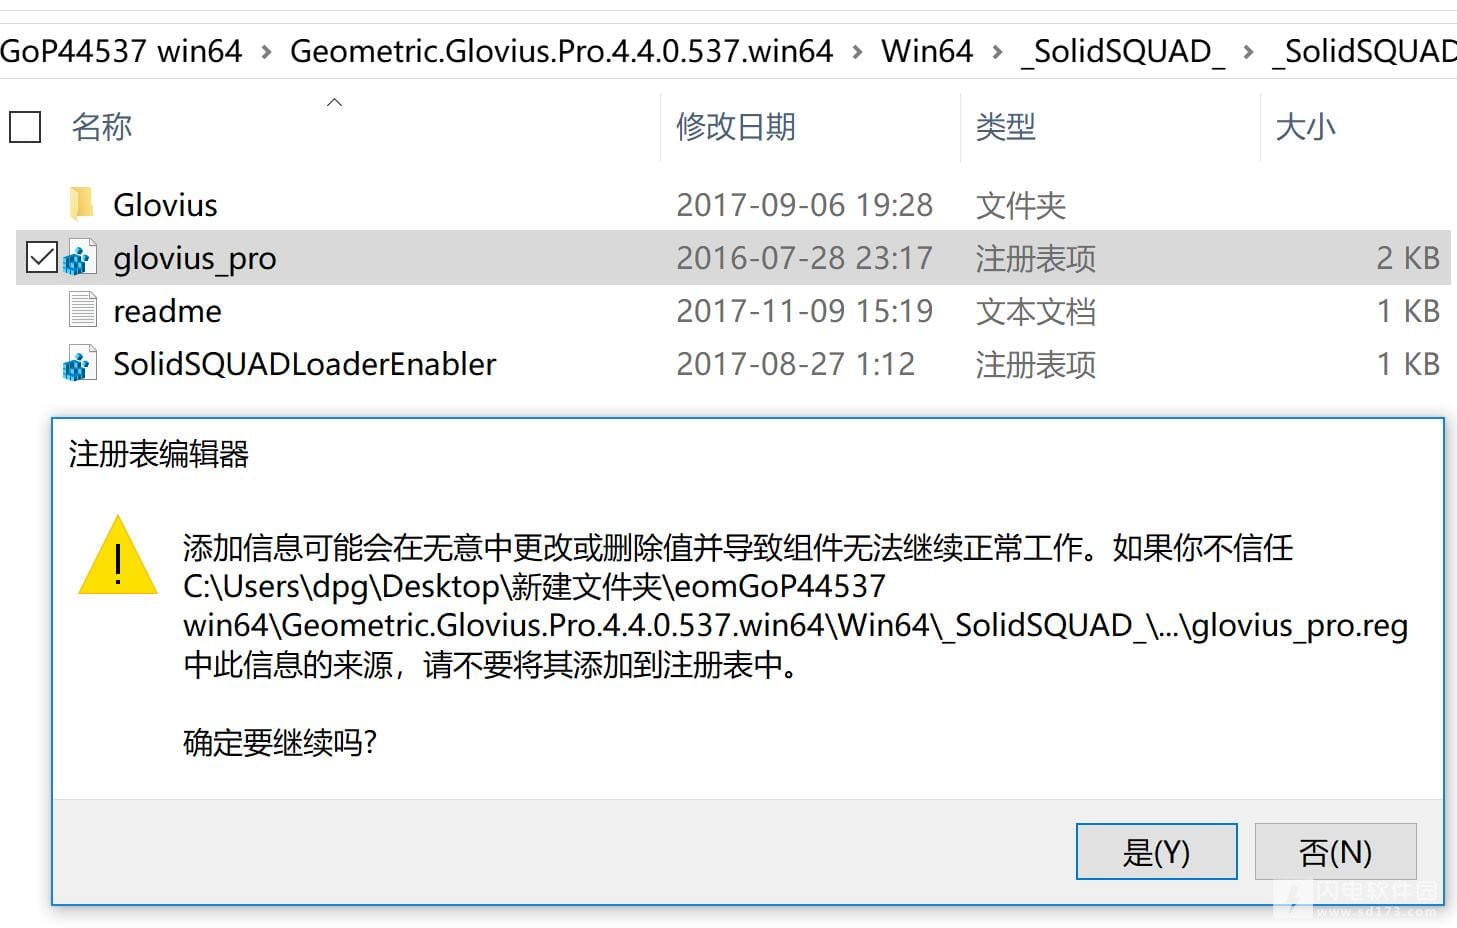 Geometric Glovius Pro 6.1.0.287 instal the new version for windows